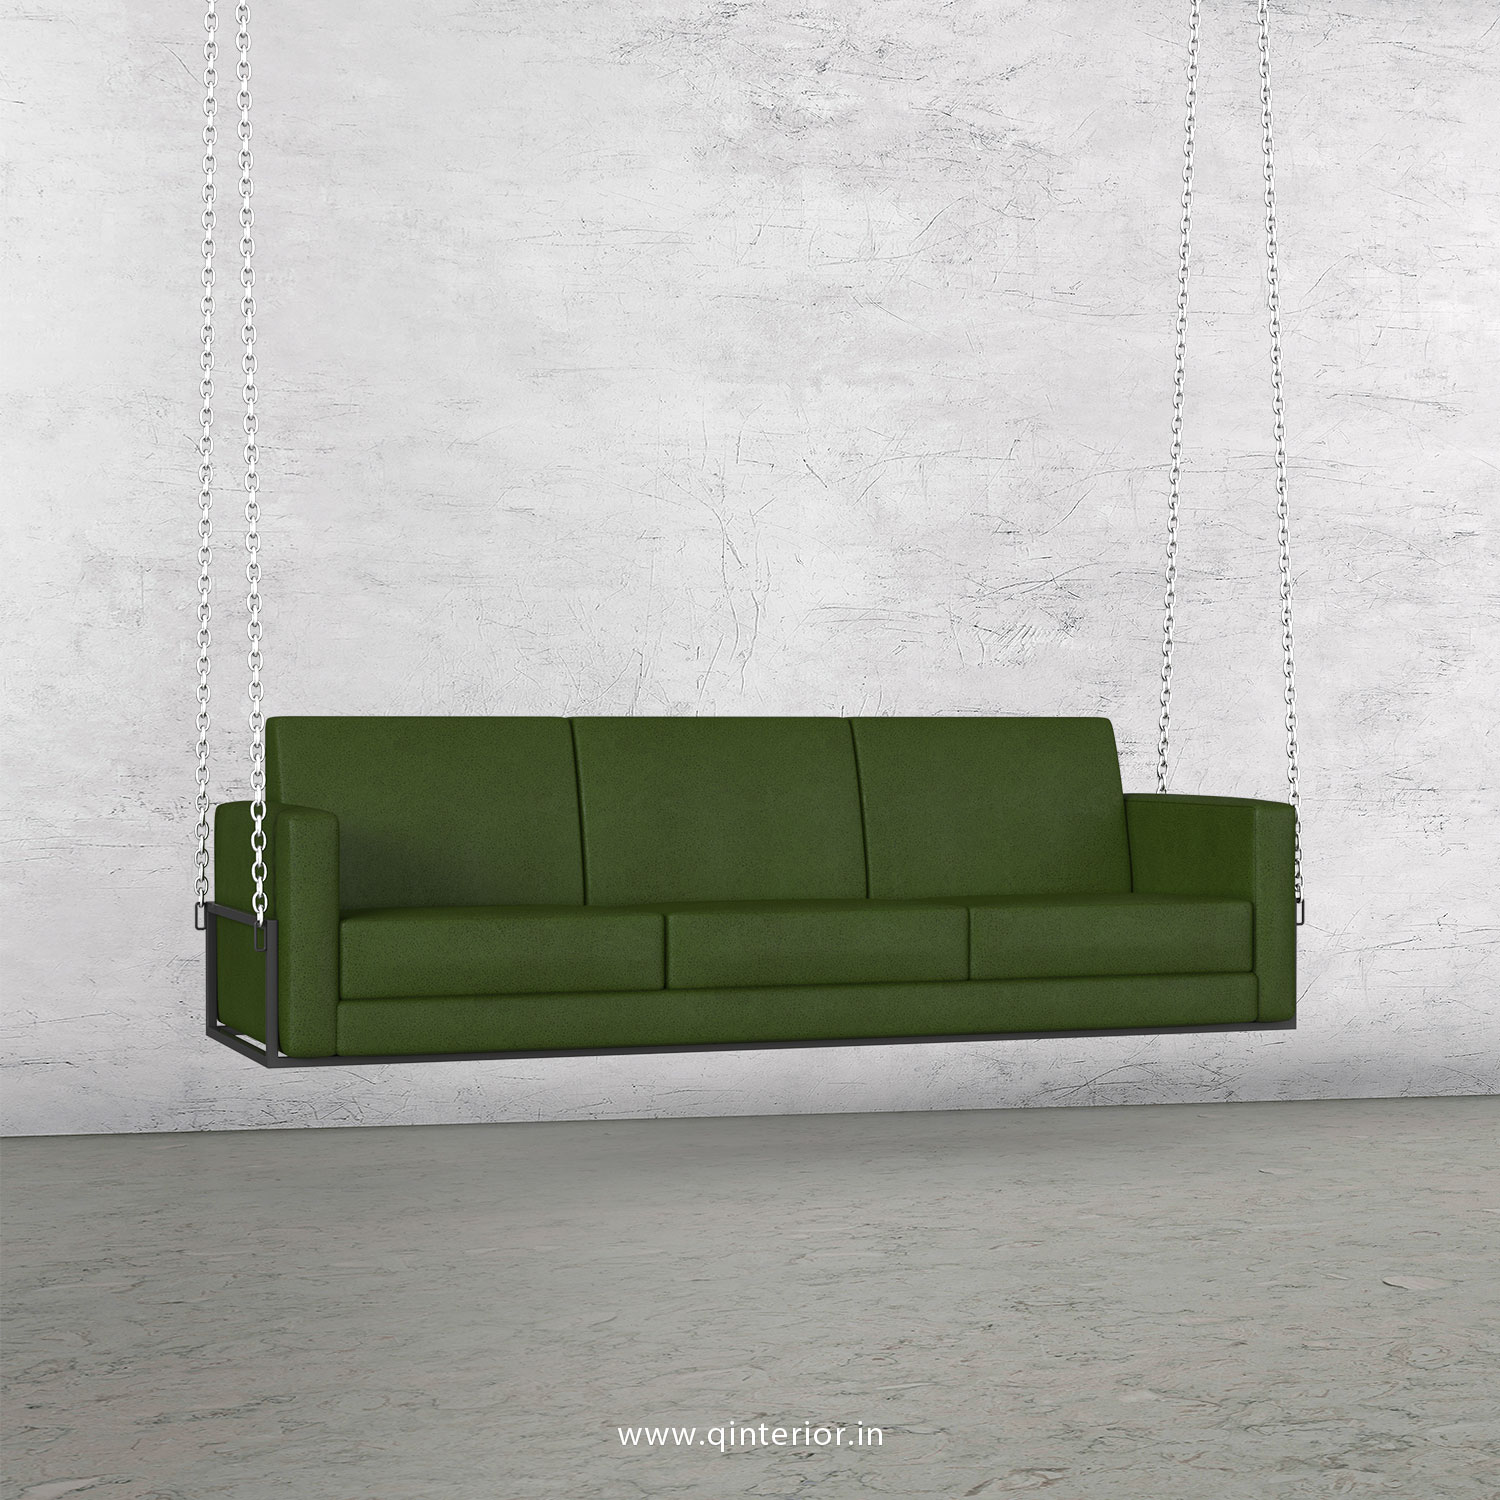 NIRVANA 3 Seater Swing Sofa in Fab Leather Fabric - SSF001 FL04